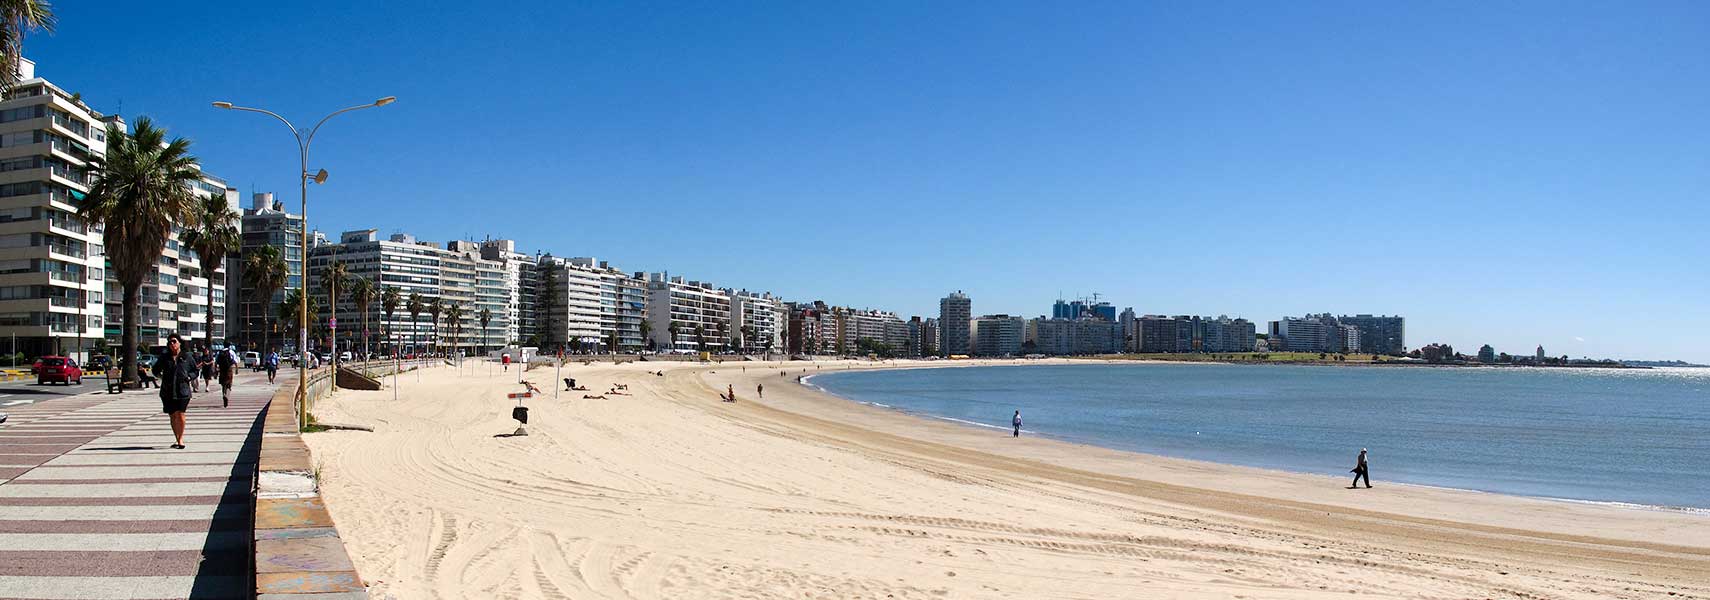 Playa de Pocitos, Montevideo, Montevideo's beach